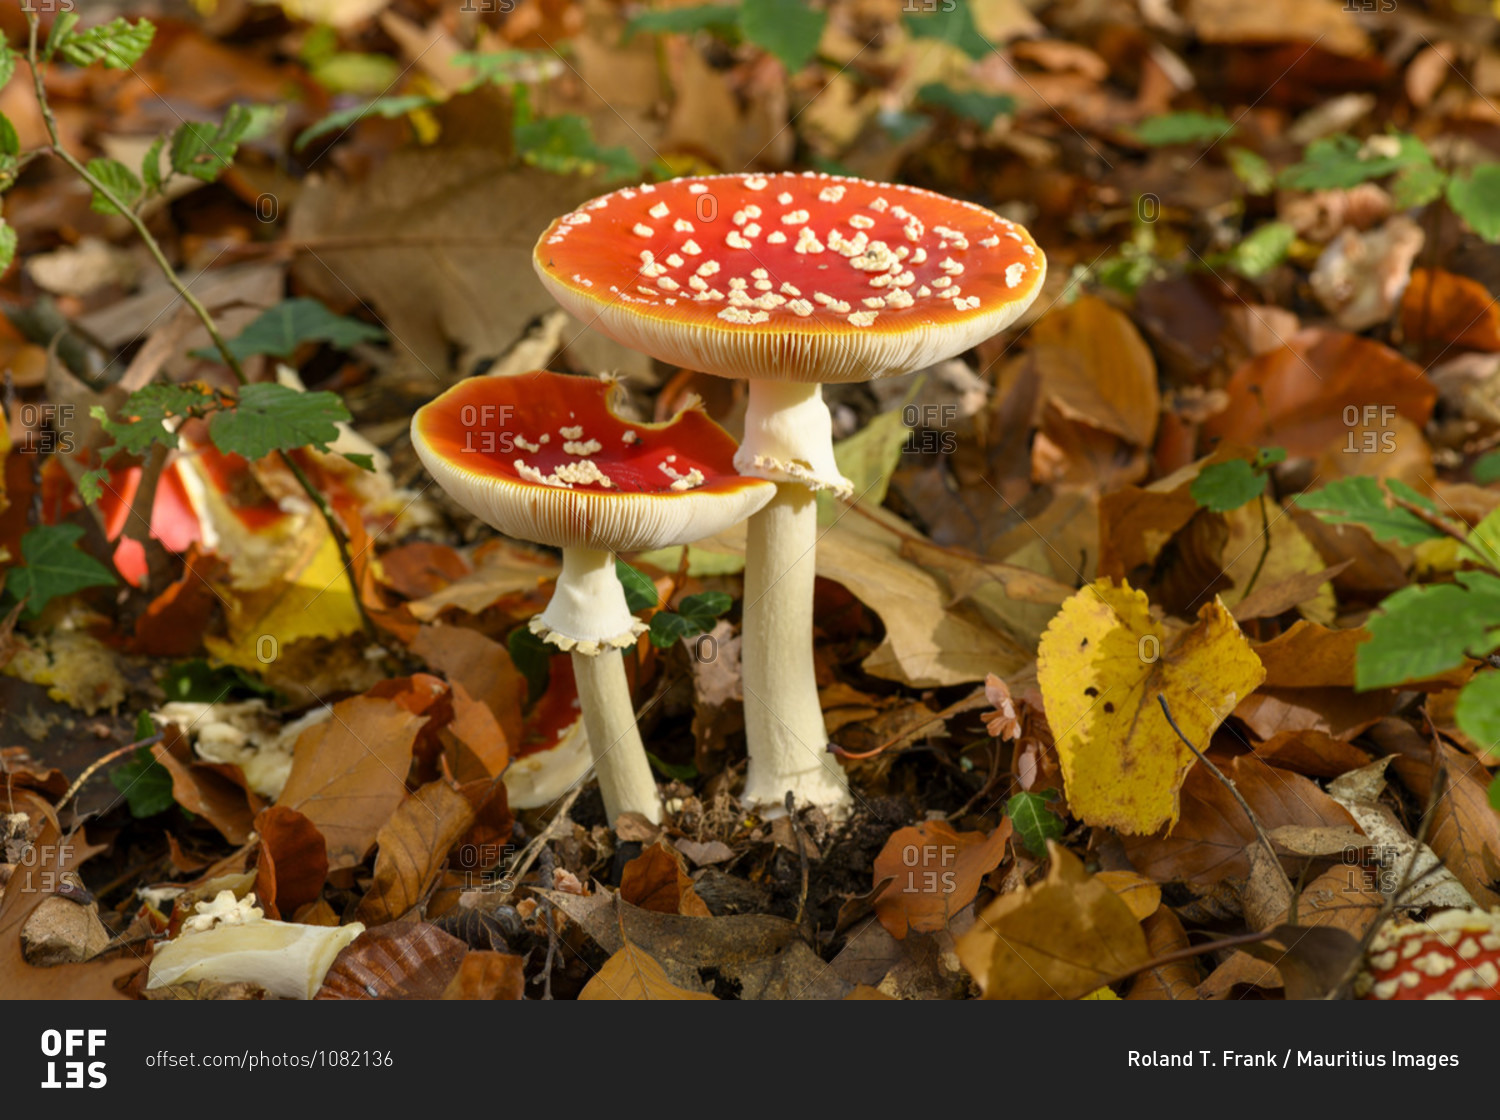 Toadstool (Amanita muscaria), red toadstool, poisonous mushroom species.